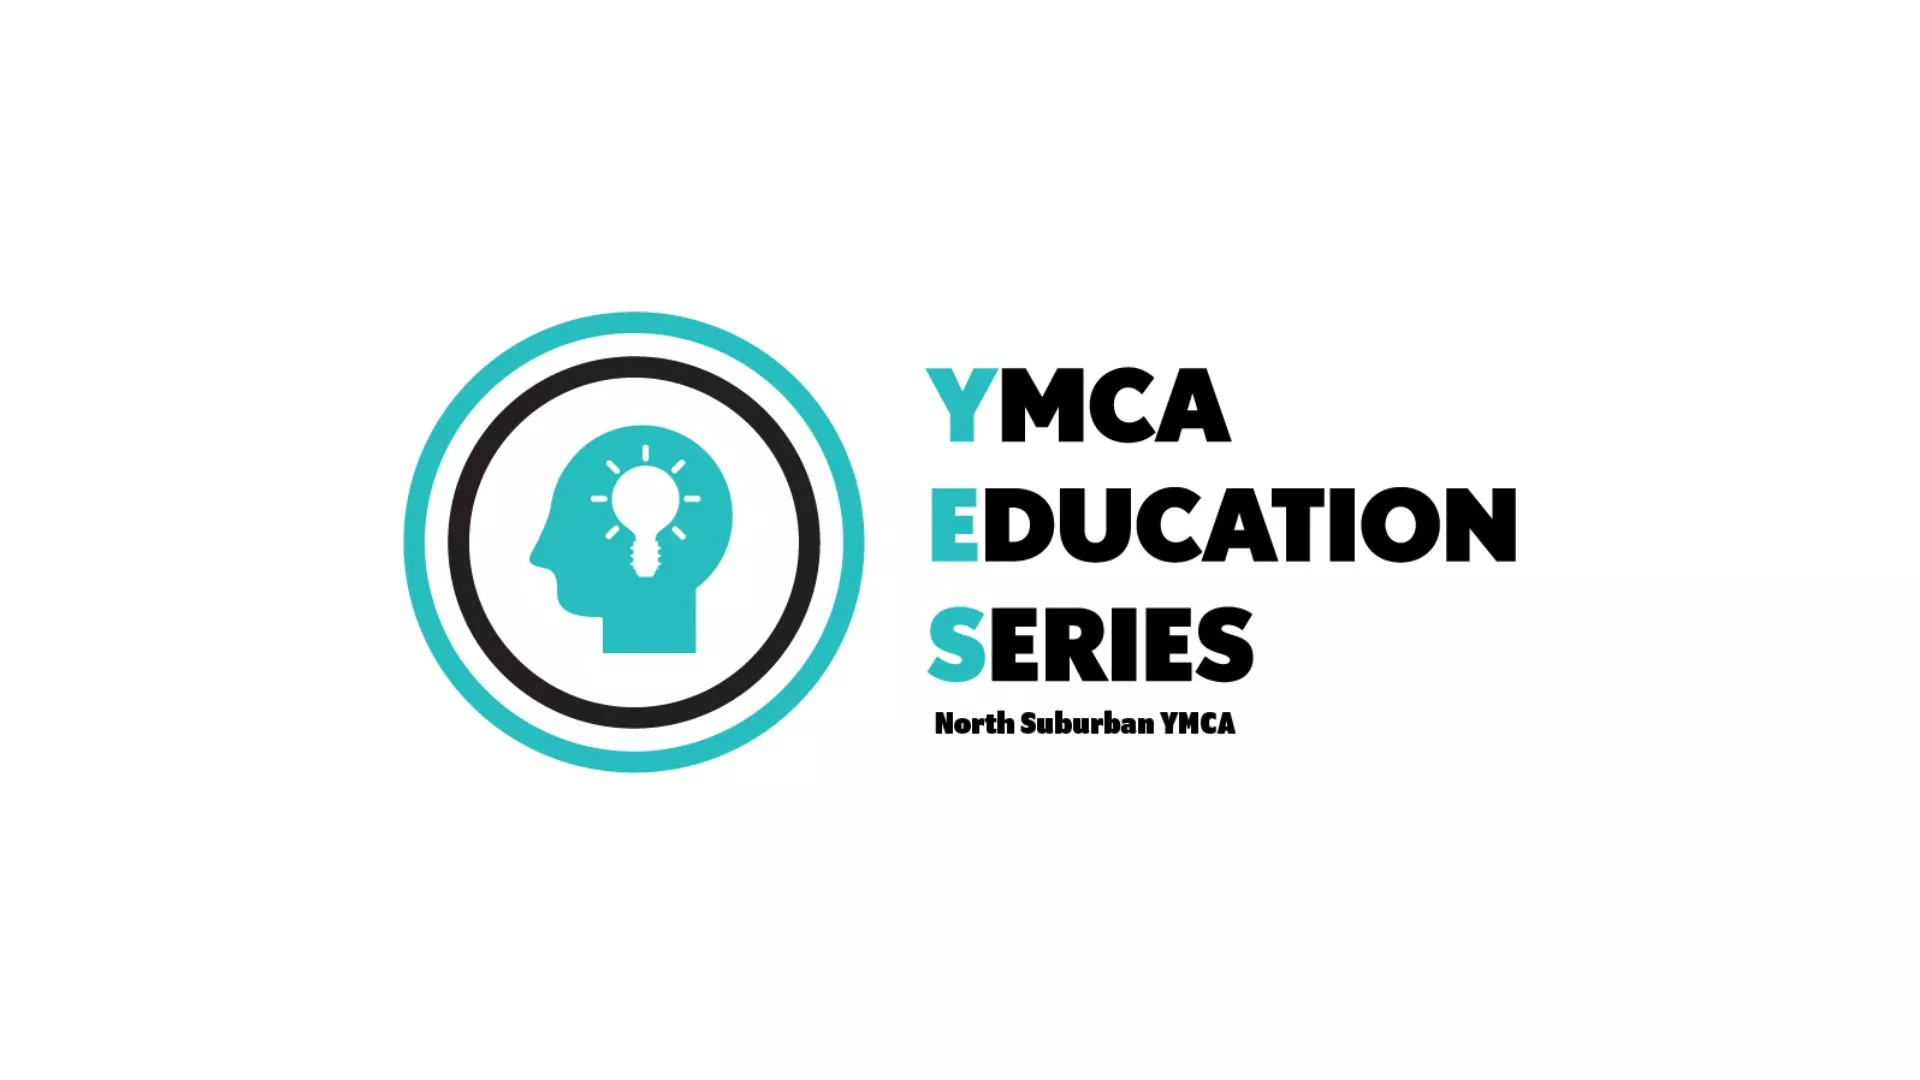 YMCA EDUCATION SERIES LOGO